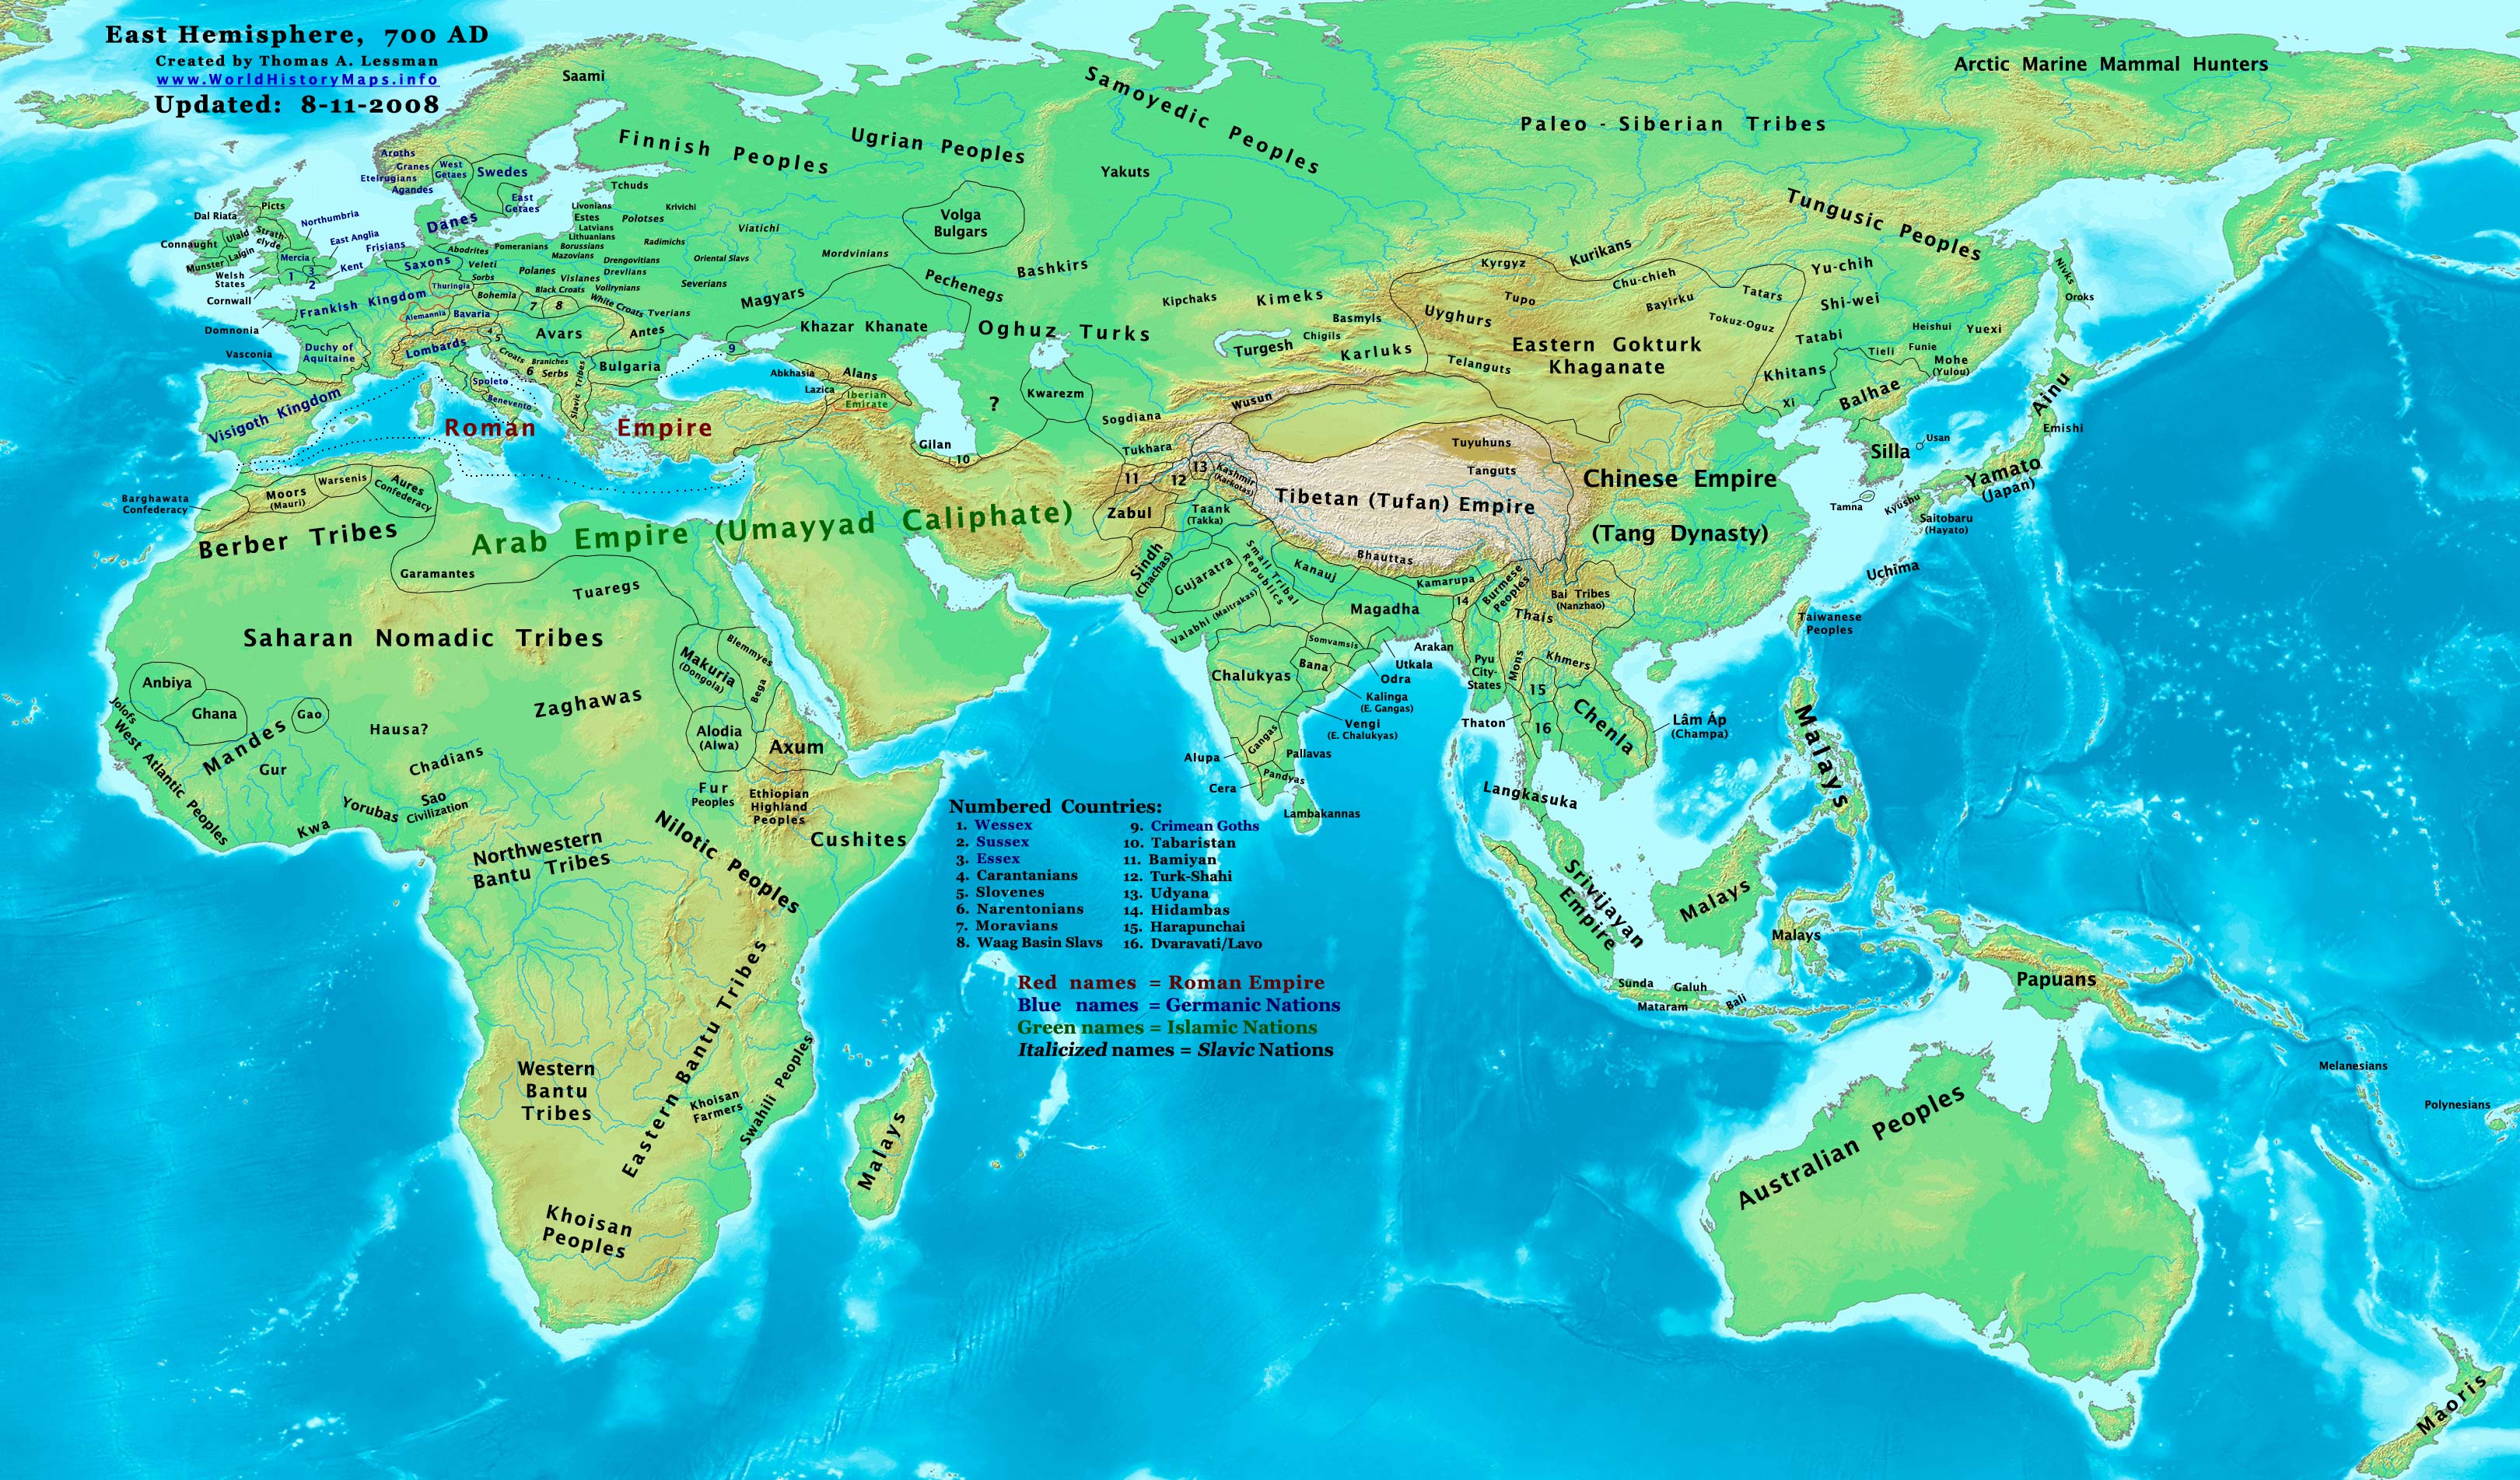 bowens-blog-eastern-hemisphere-map